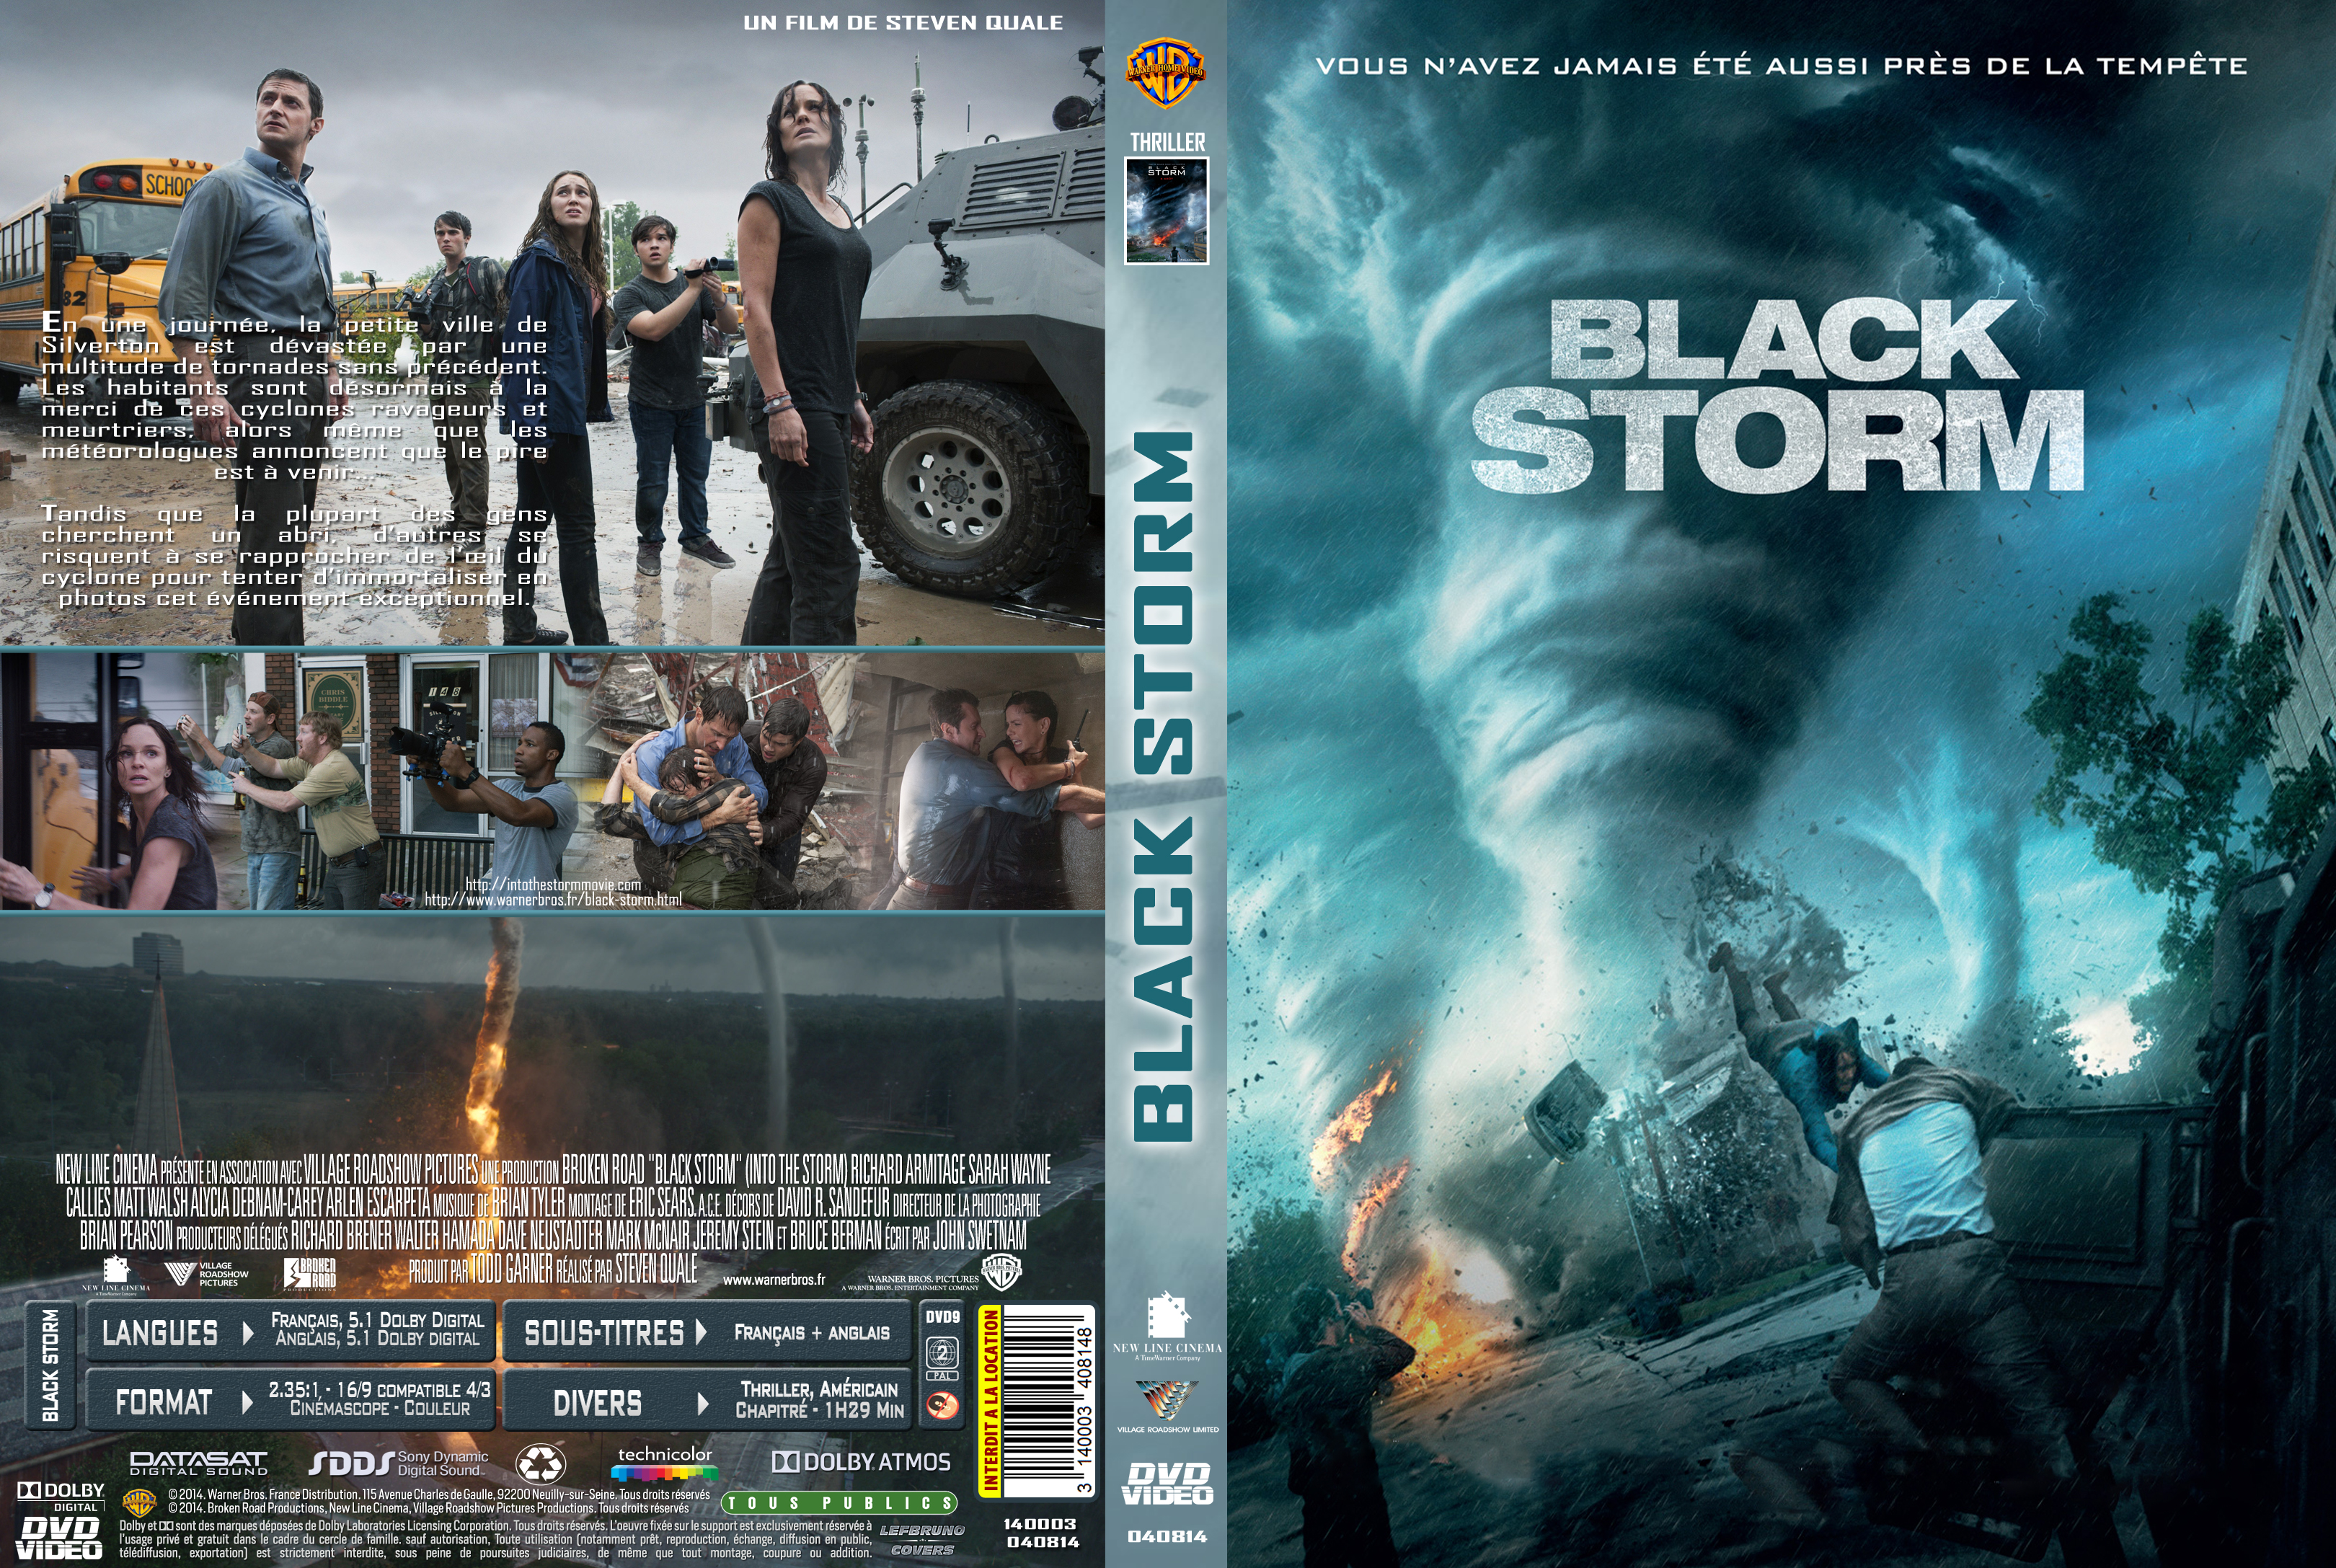 Jaquette DVD Black Storm custom